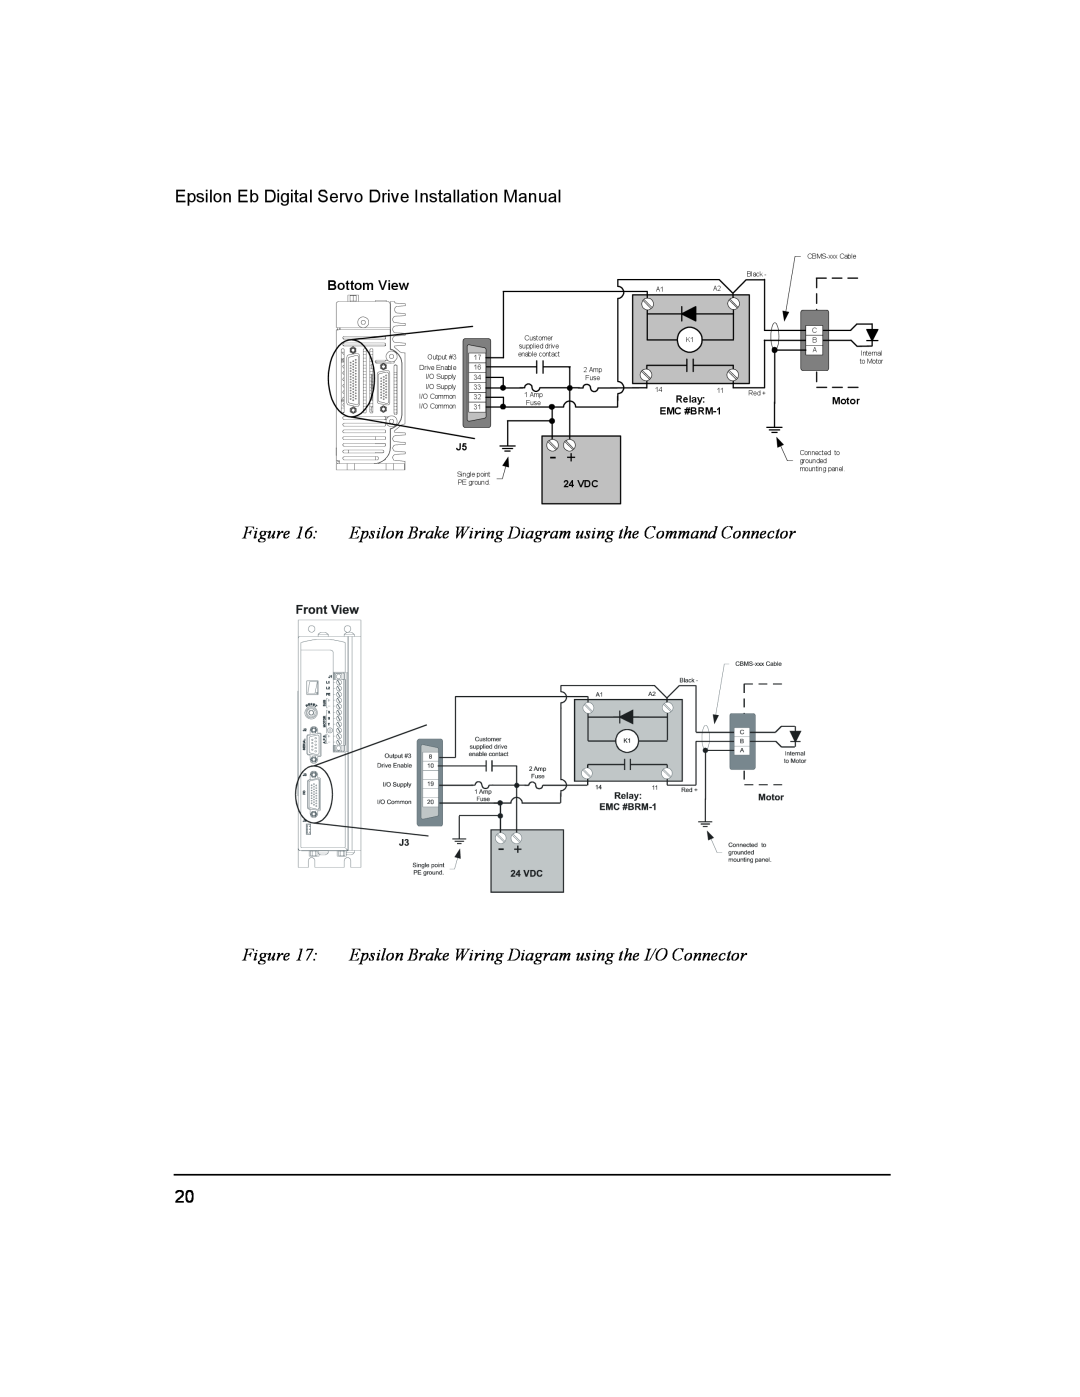 Emerson 400501-05 Epsilon Brake Wiring Diagram using the Command Connector, Bottom View, 24 VDC, Relay, Motor, EMC #BRM-1 